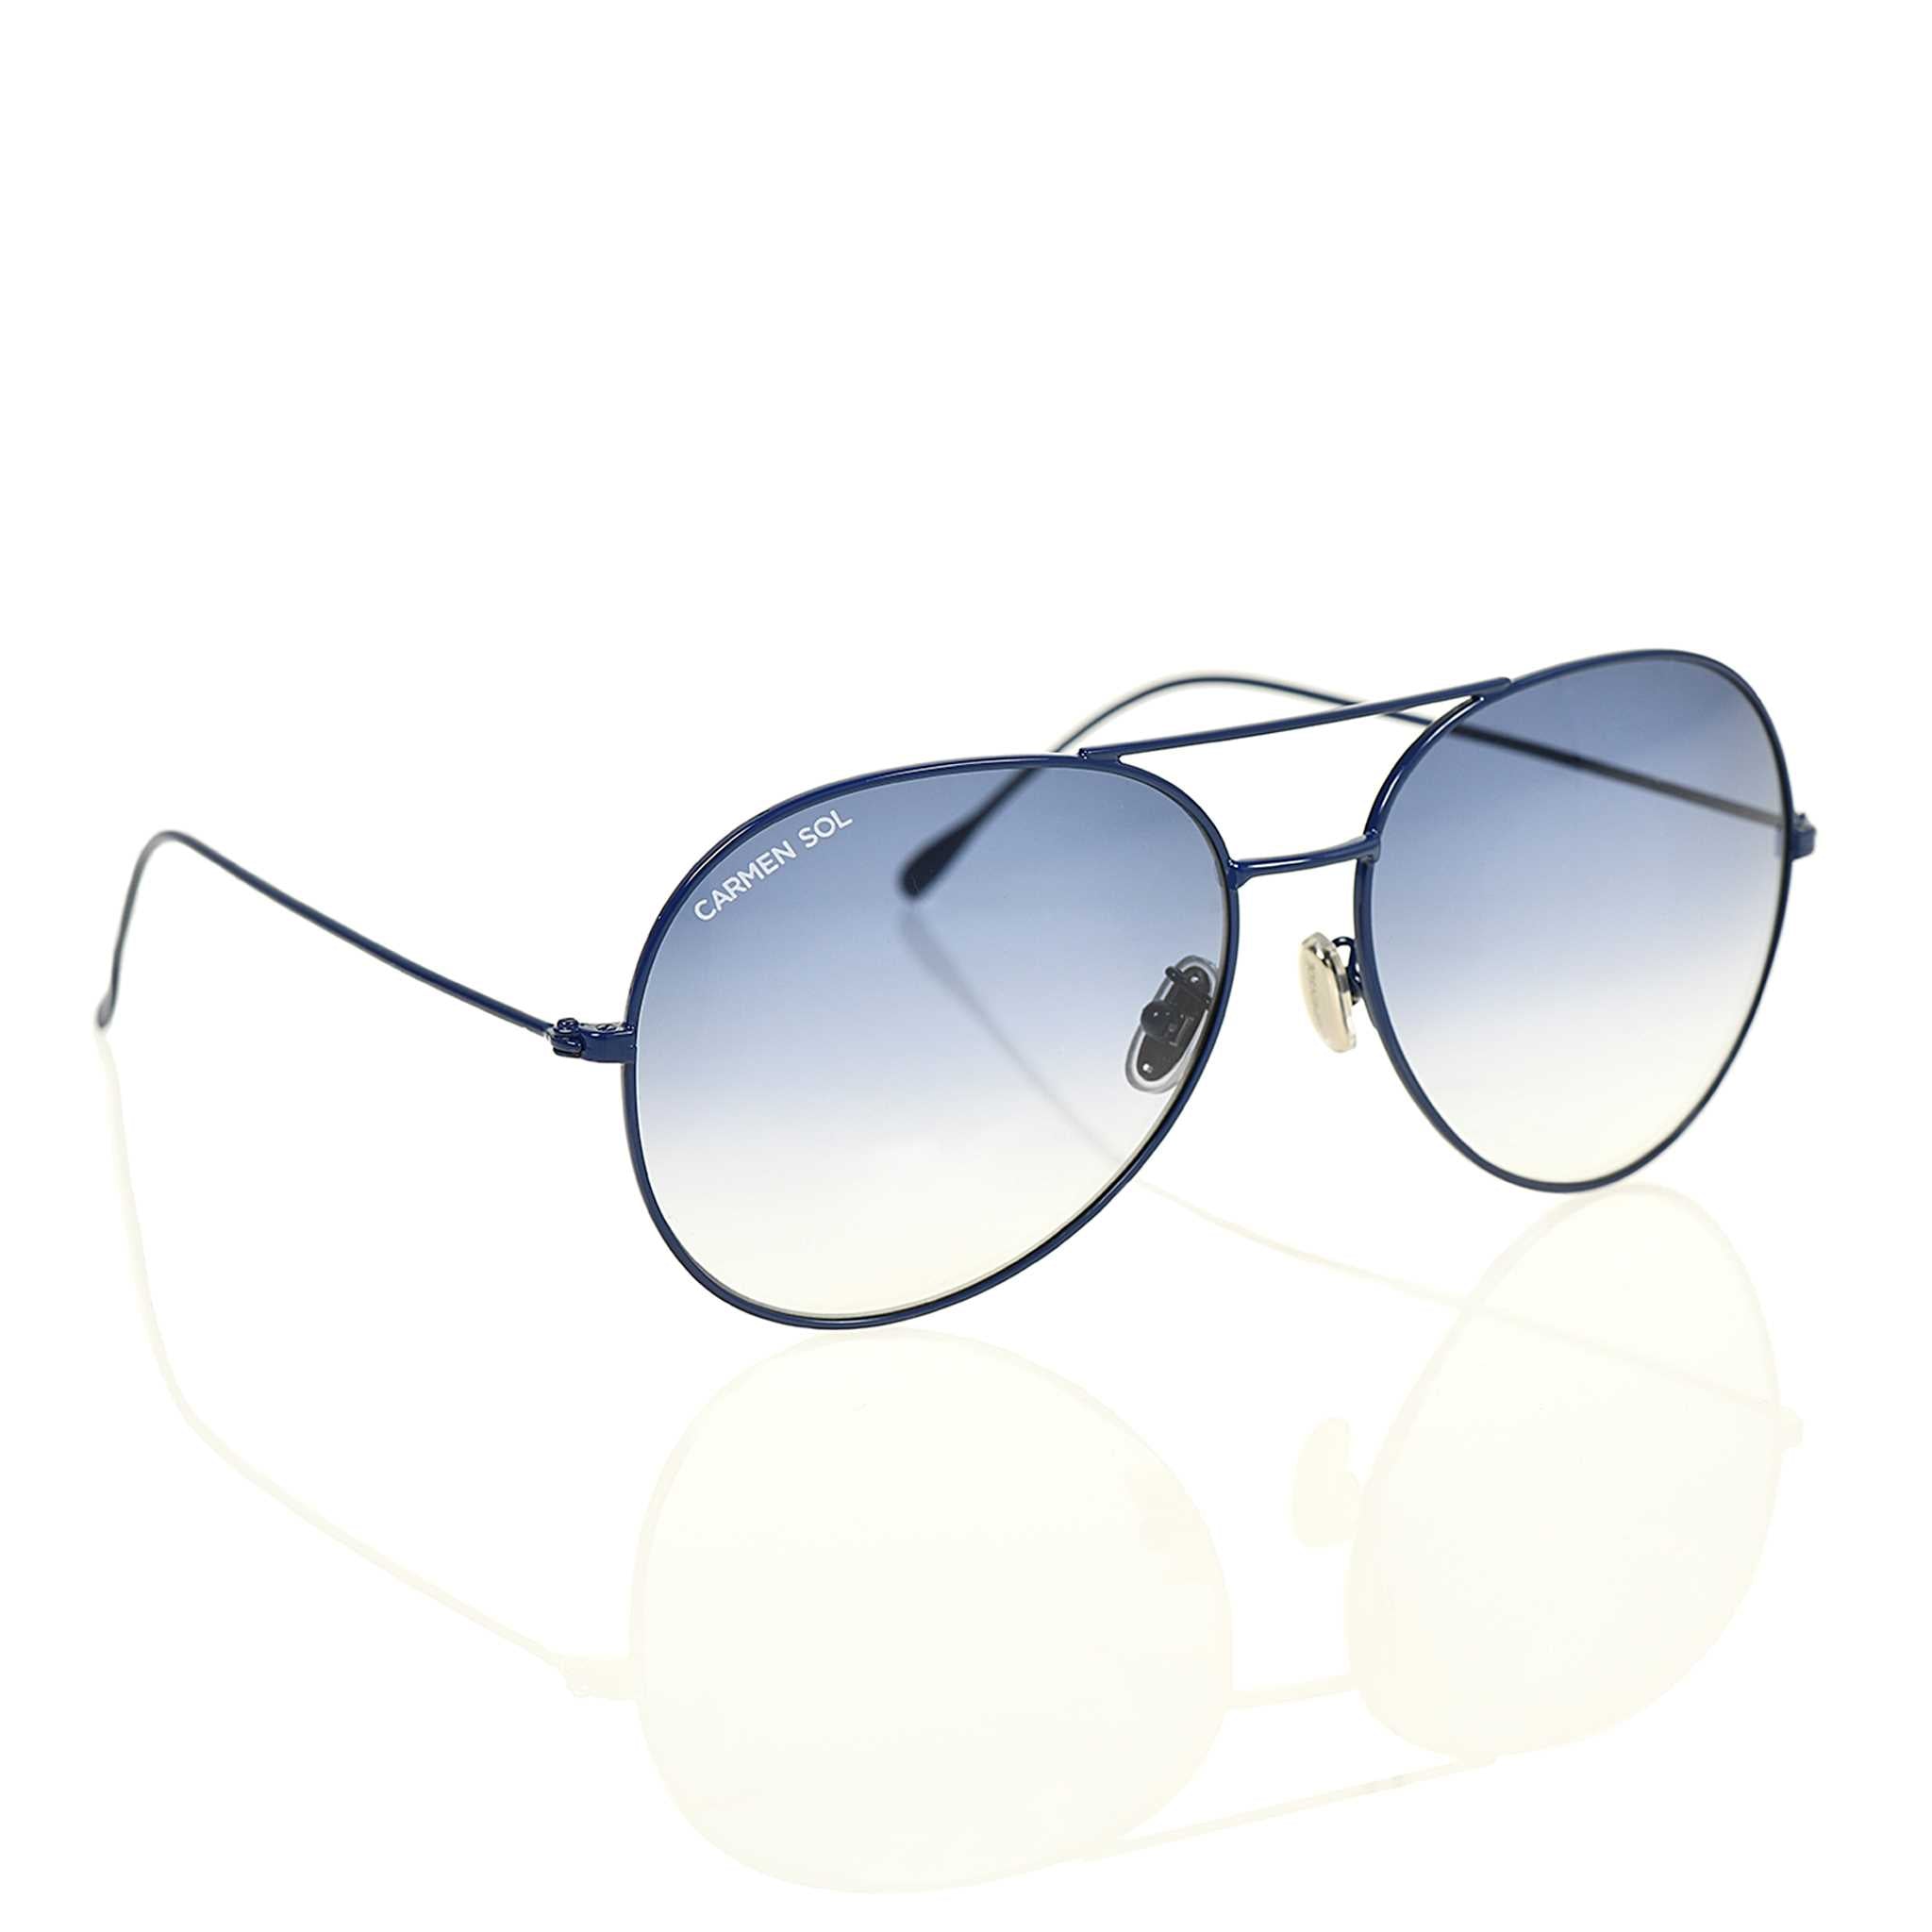 Image of Navy Aviator sunglasses